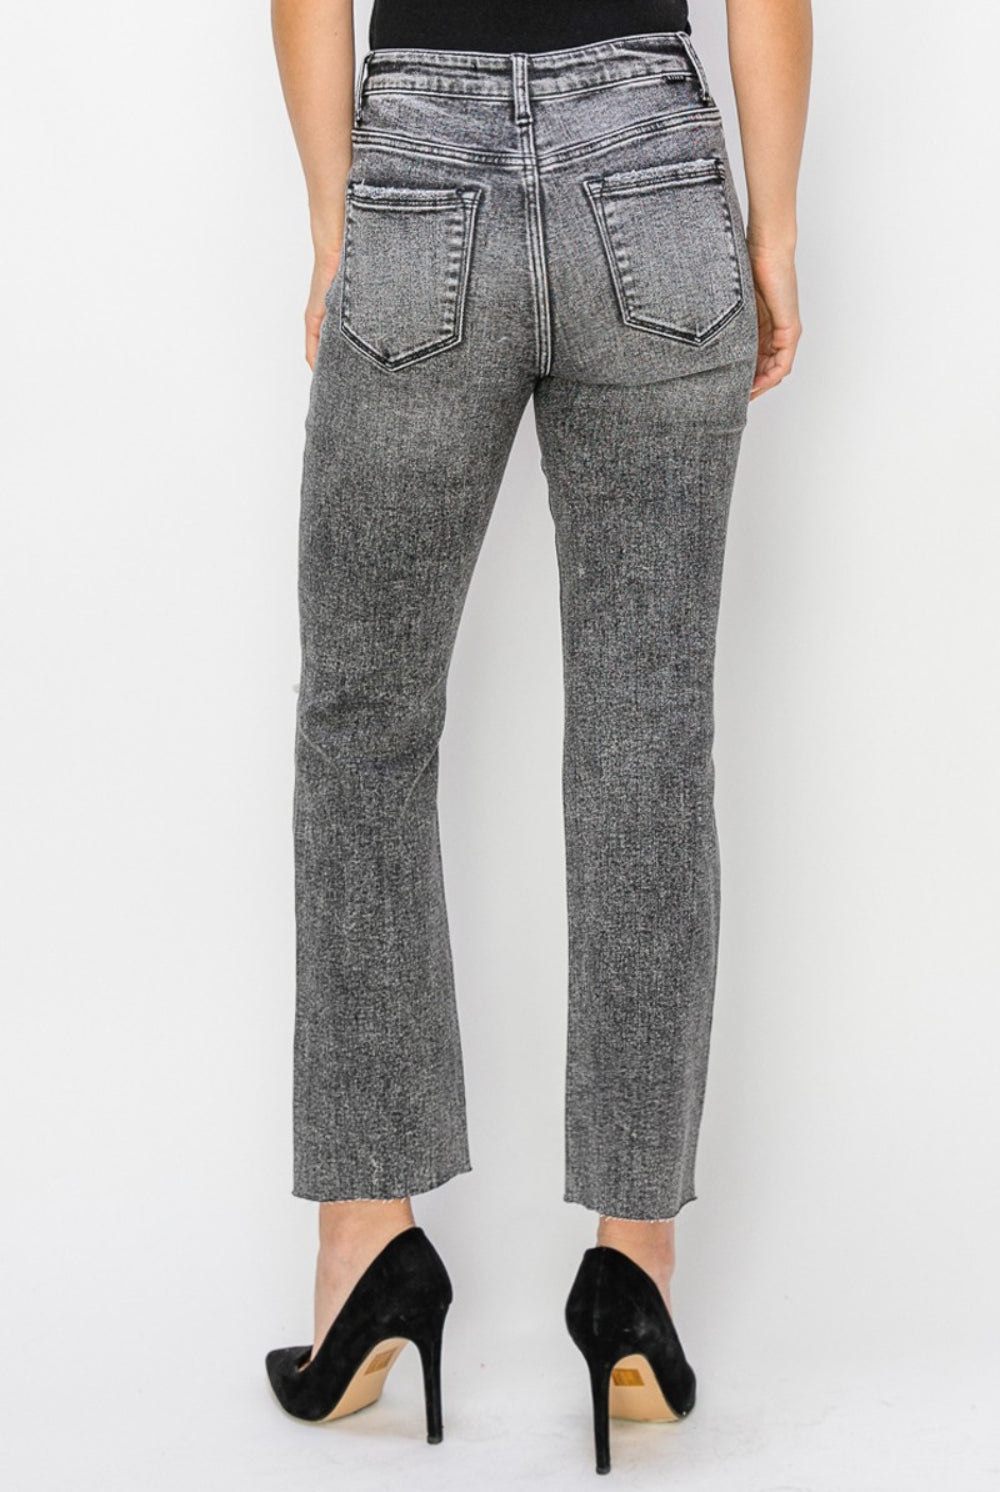 RISEN High Waist Distressed Straight Jeans-Krush Kandy, Women's Online Fashion Boutique Located in Phoenix, Arizona (Scottsdale Area)